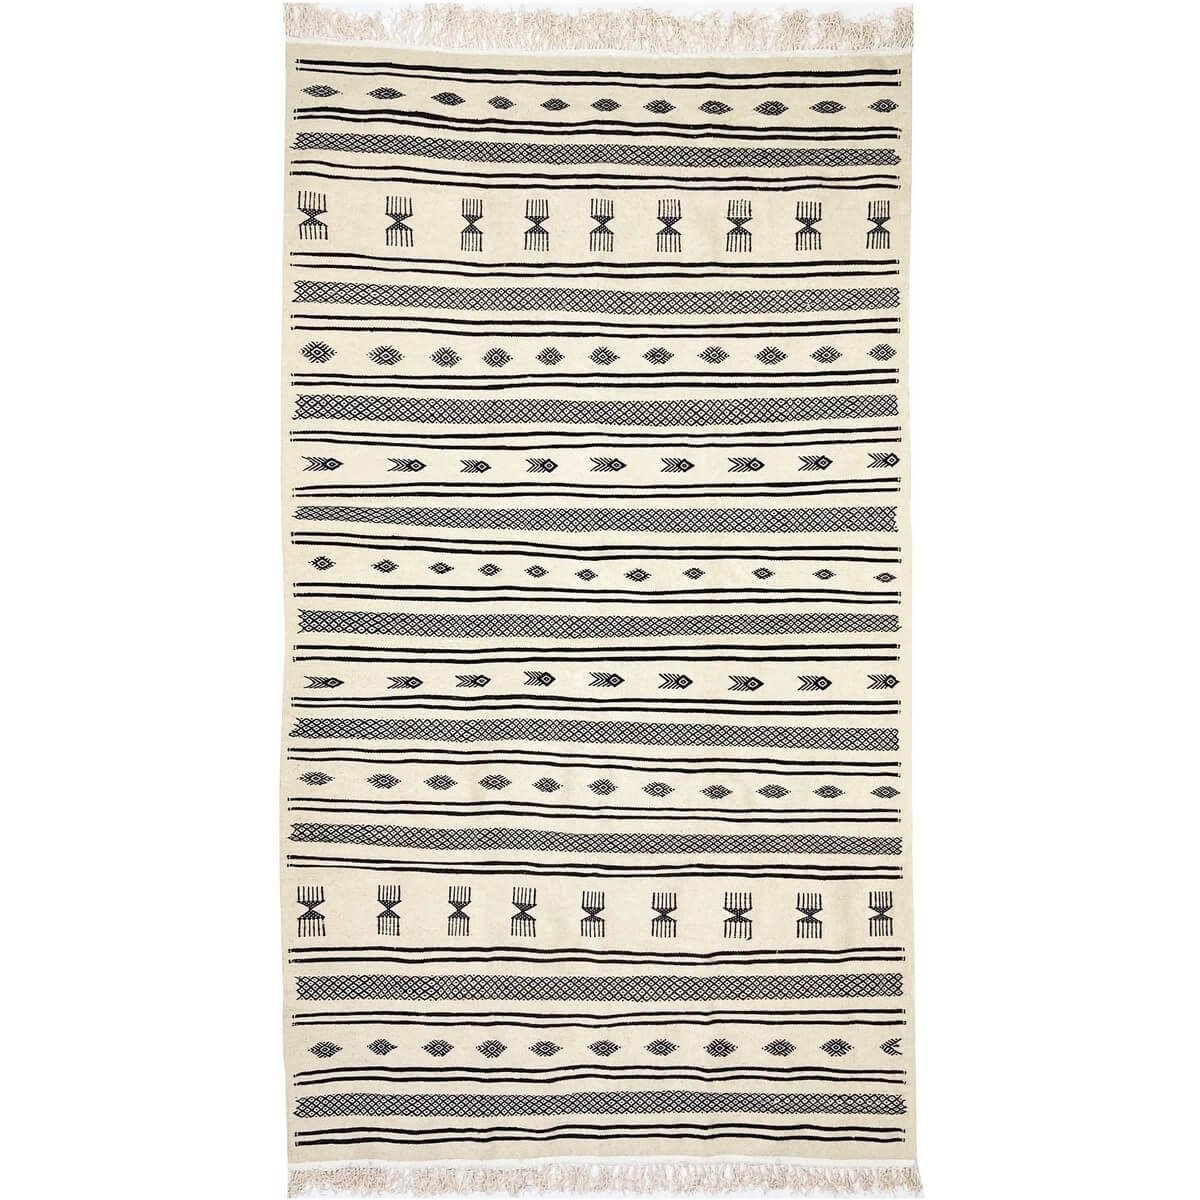 Berber tapijt Tapijt Kilim Tizwa 138x255 cm Zwart en Wit (Handgeweven, Wol, Tunesië) Tunesisch kilimdeken, Marokkaanse stijl. Re